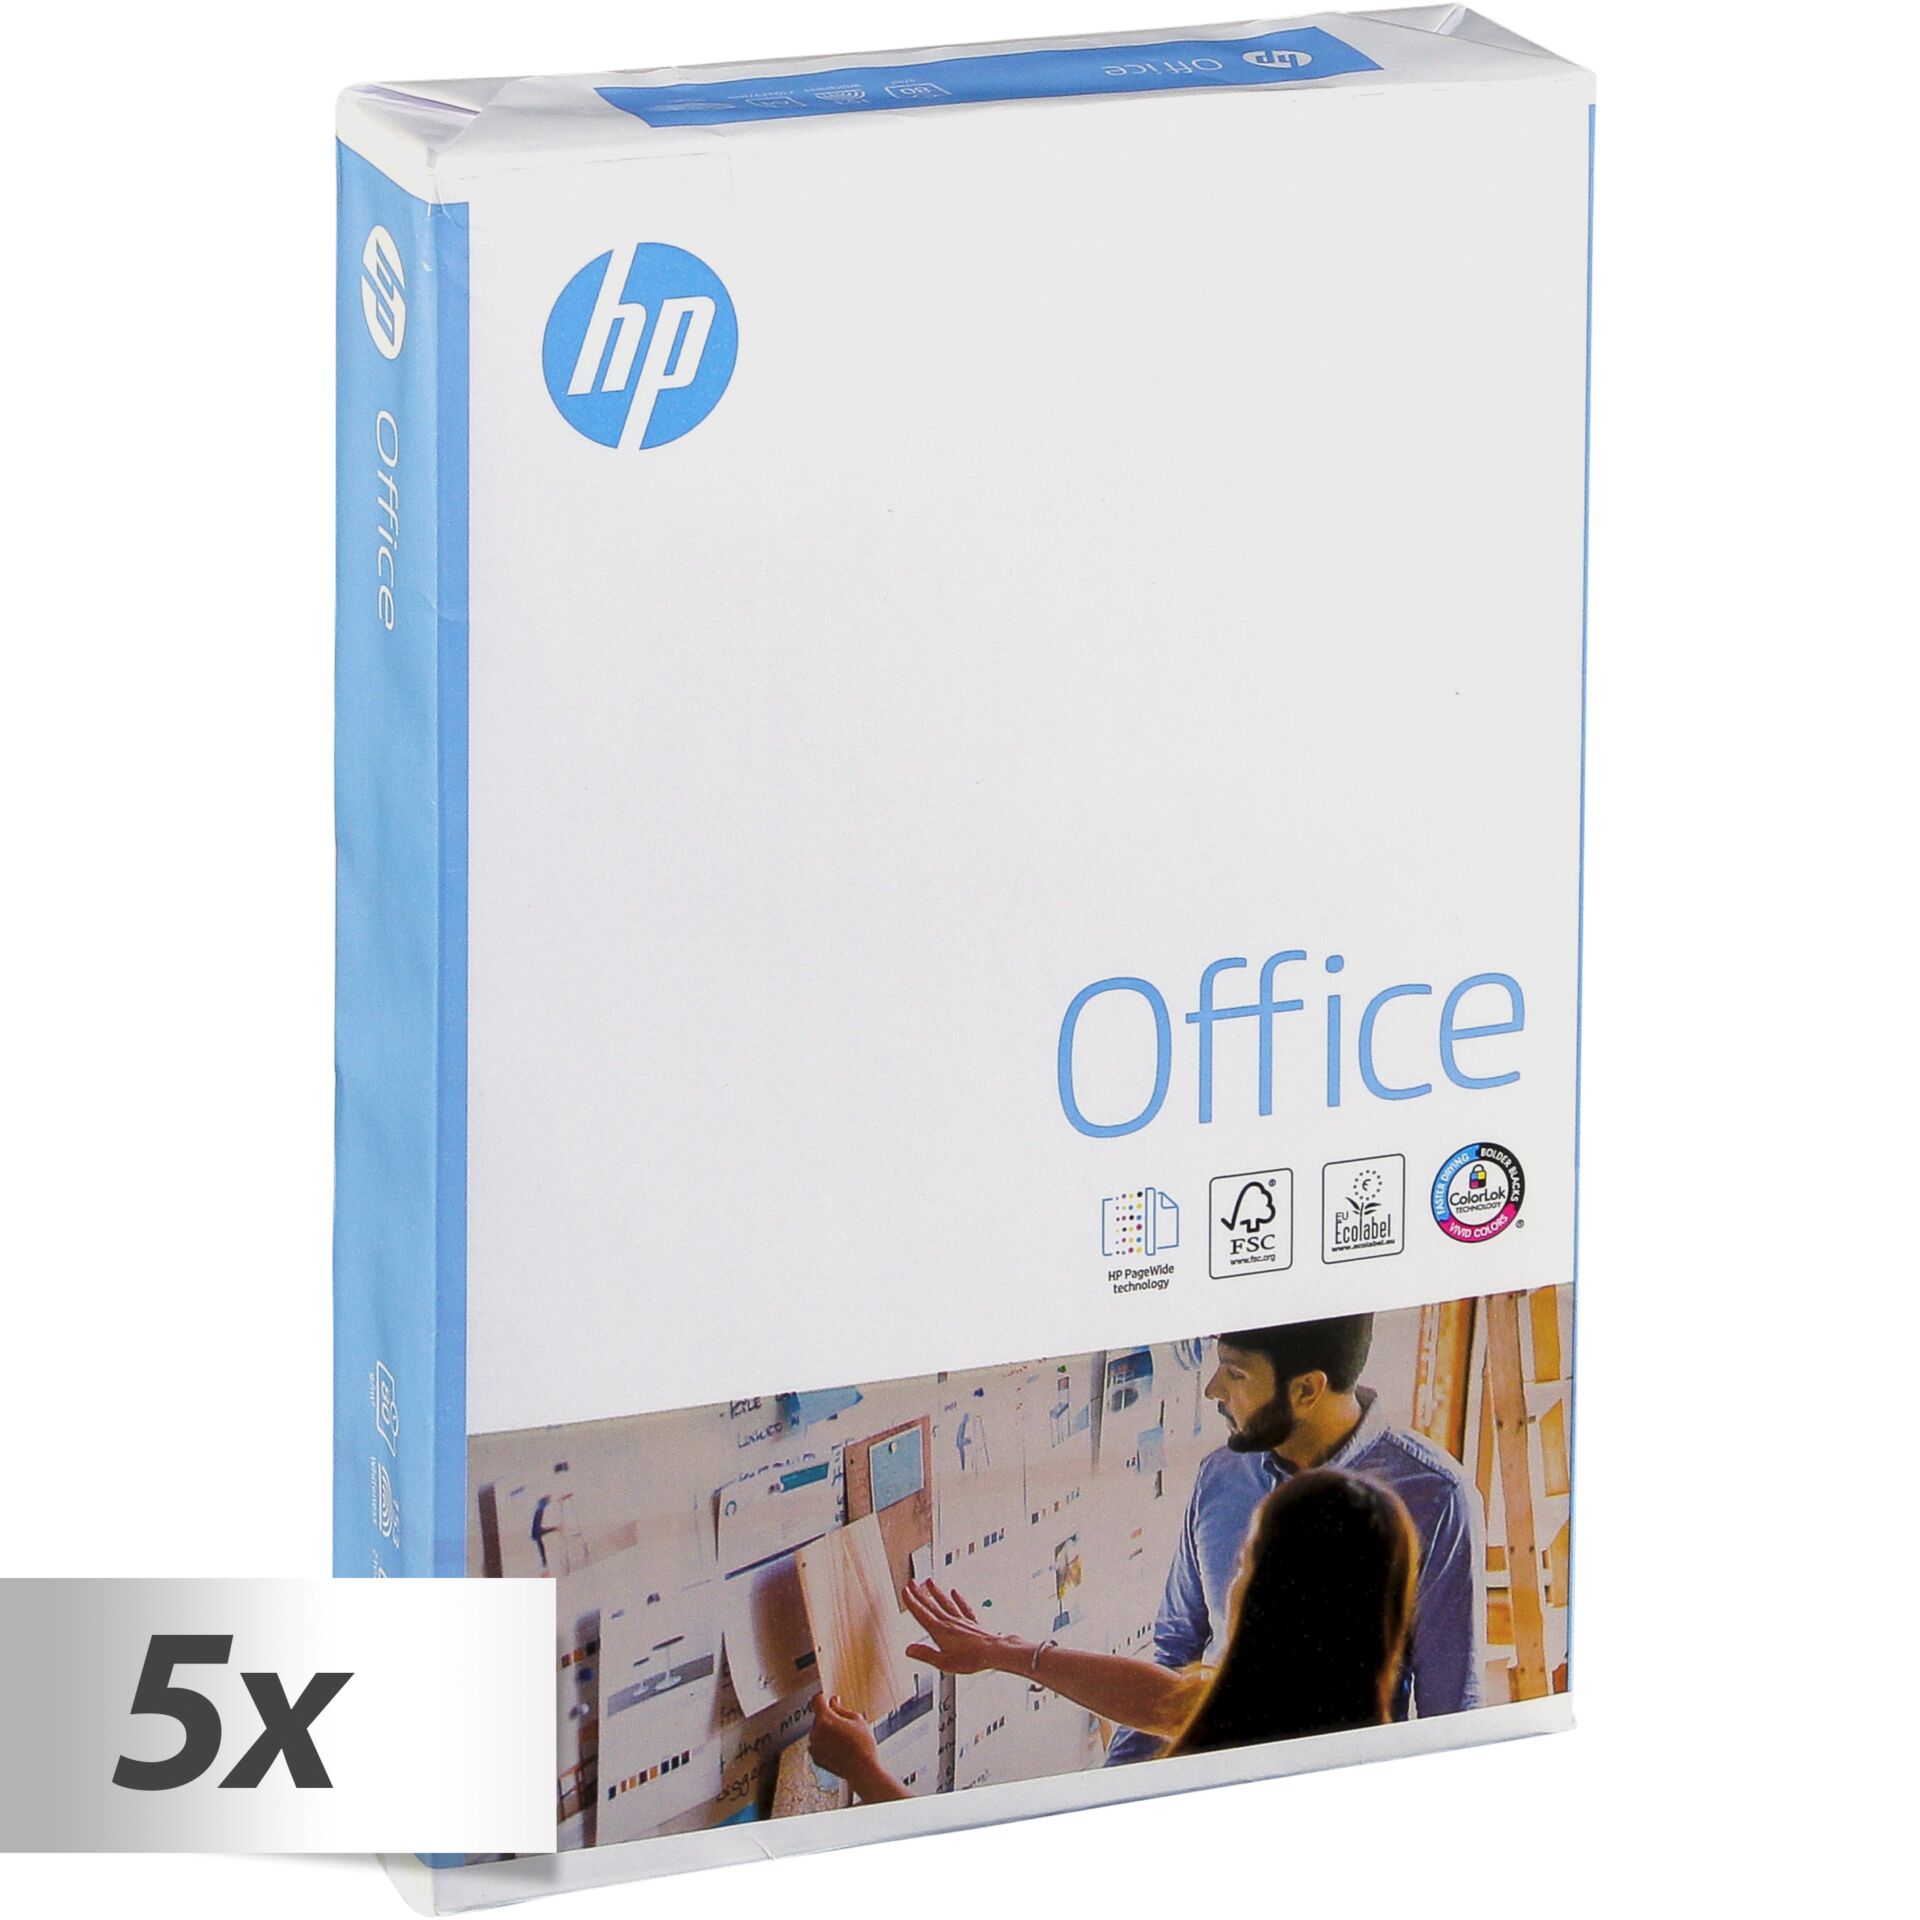 5x 500 p. HP Office bianco A 4, 80 g, CHP 110 (cartone)